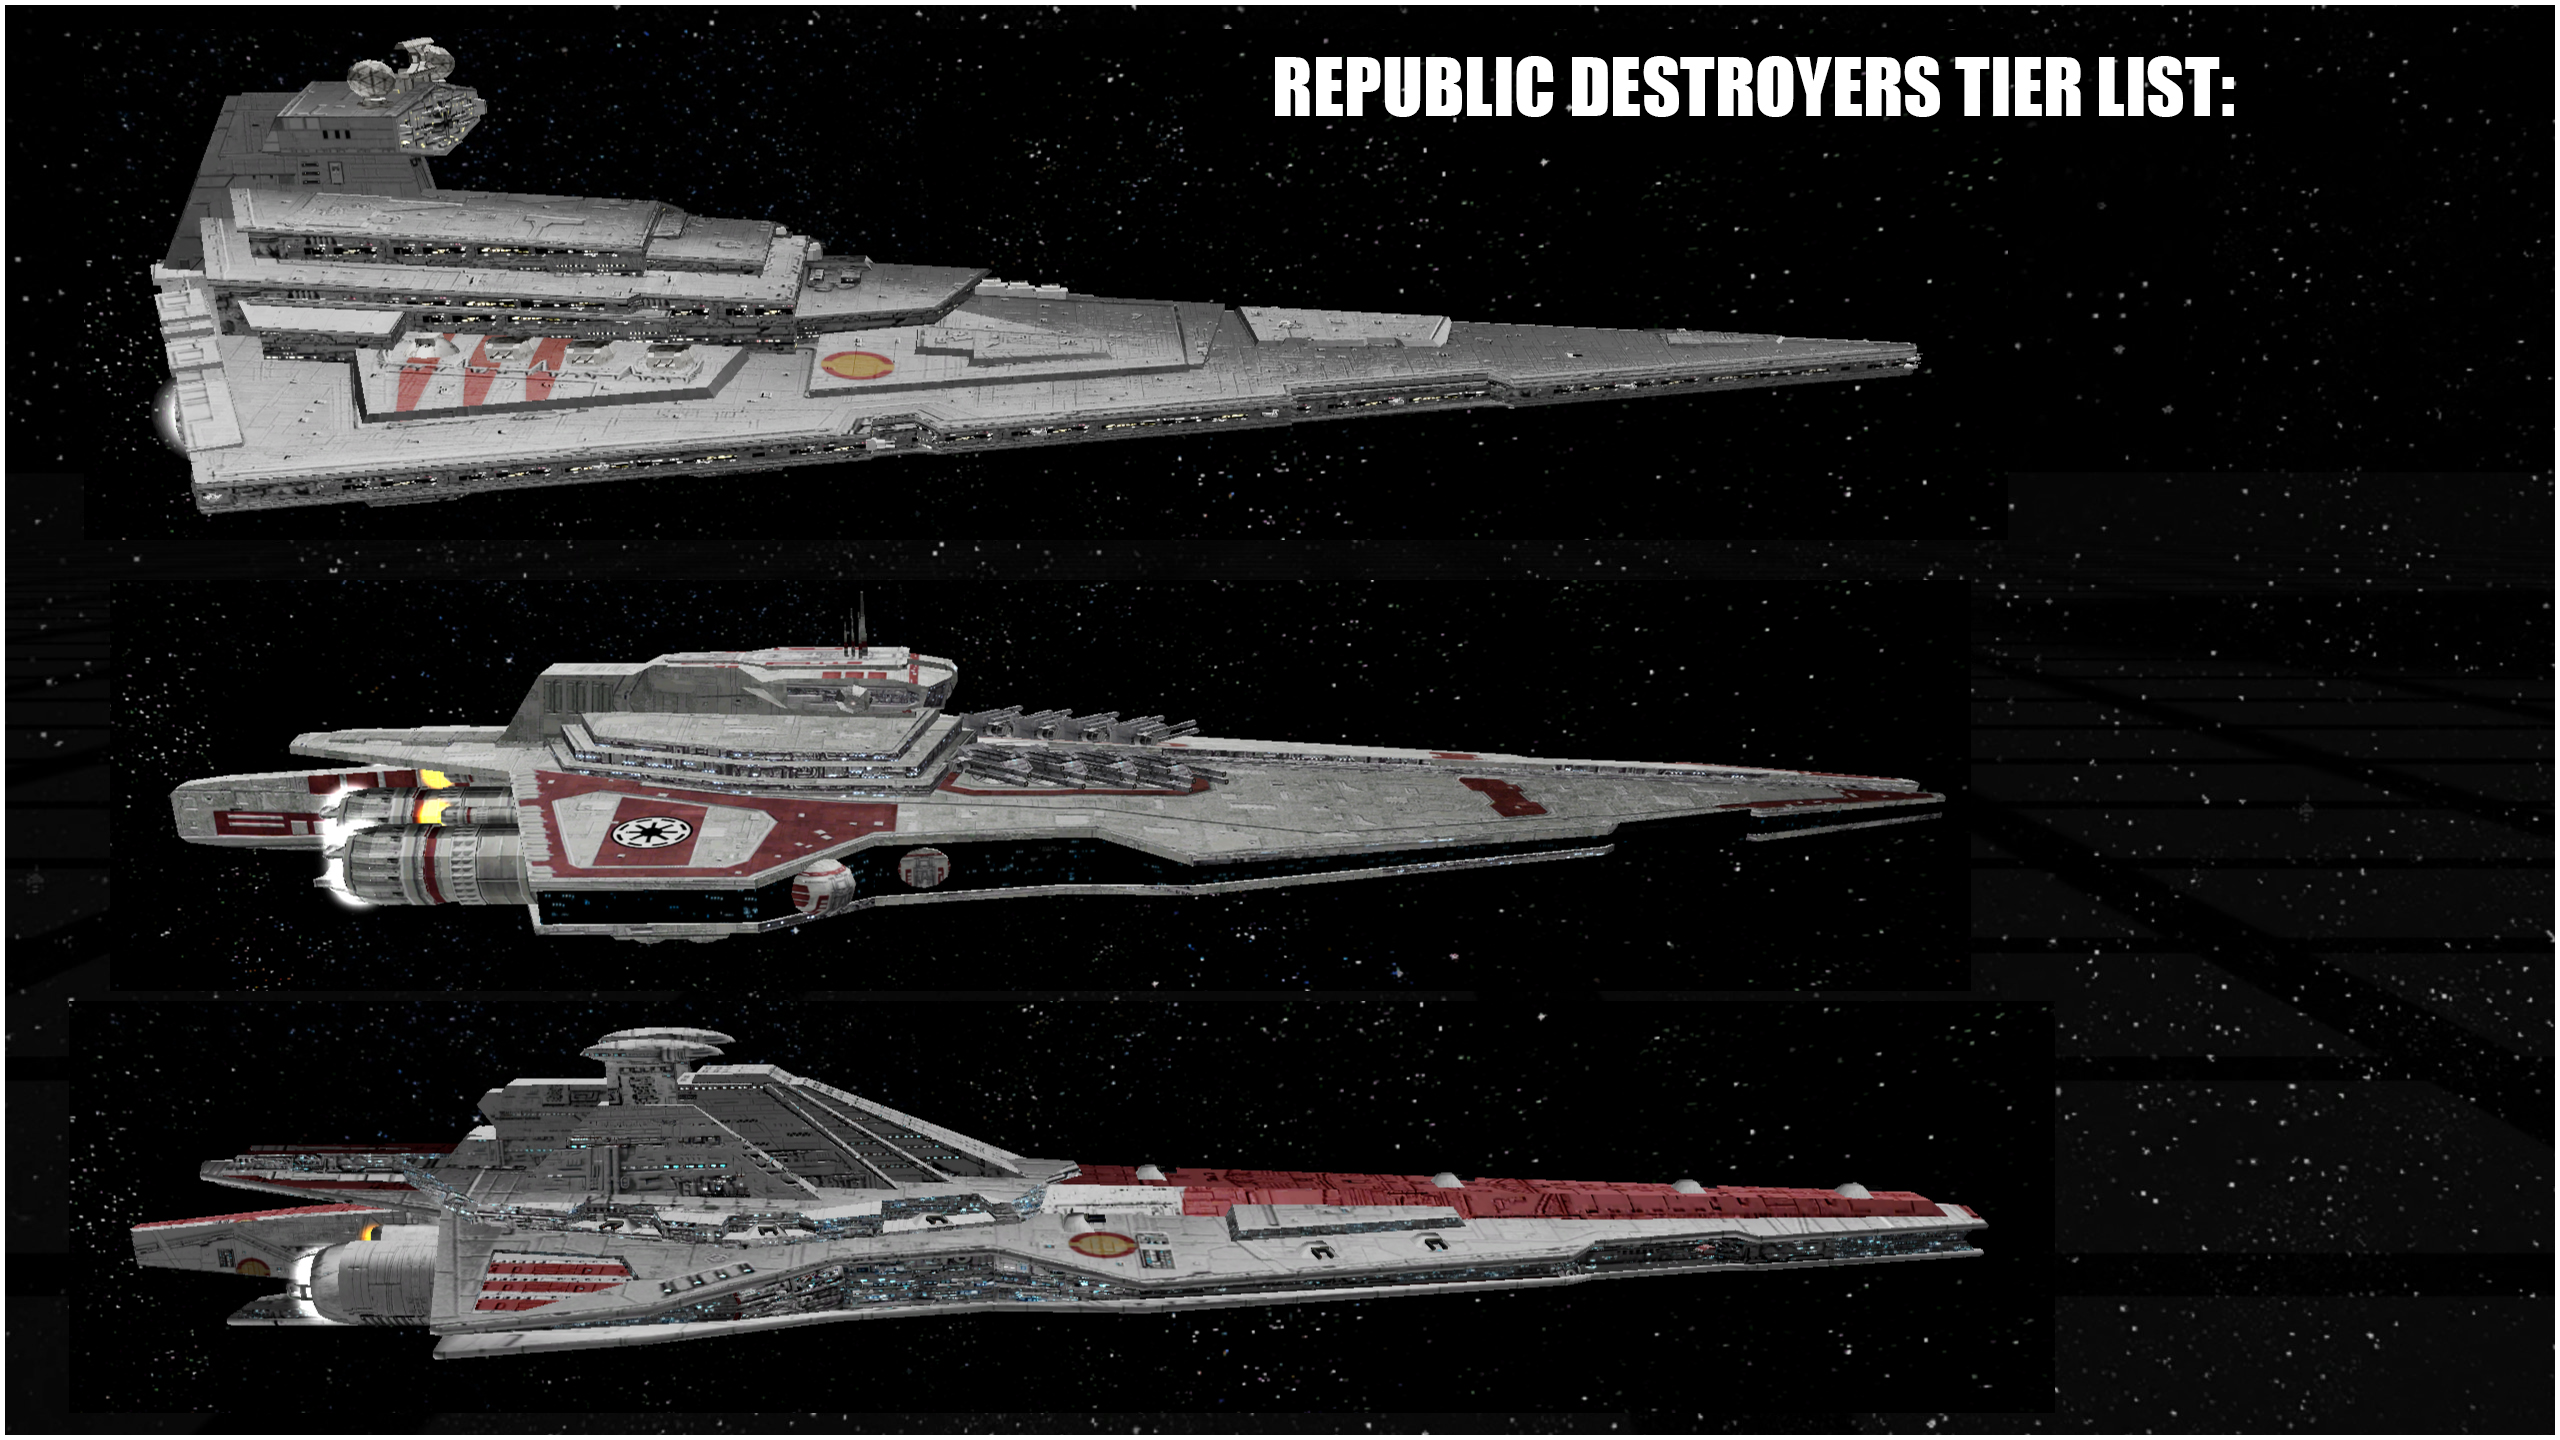 Republic Destroyers Tier List image - Star Wars Alliance Rebellion mod ...